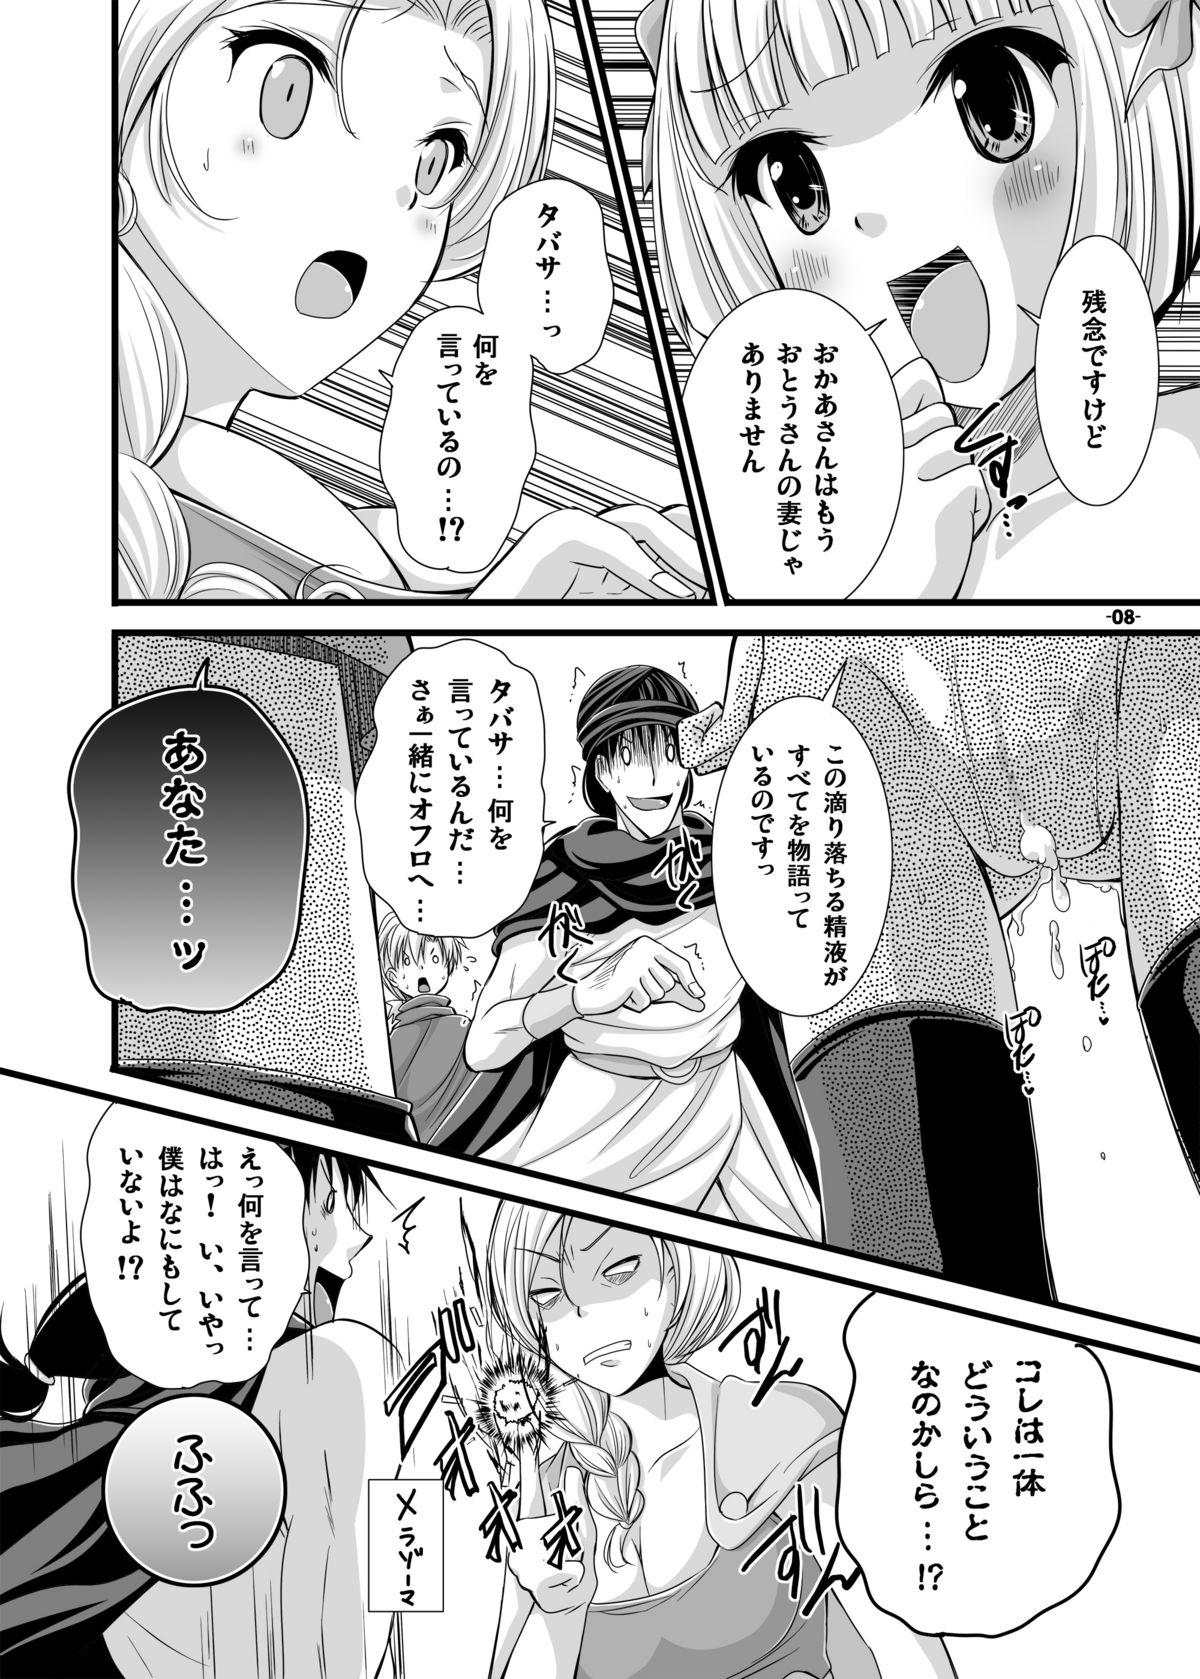 Petite Teenager Battle no Ato ni... 3 - Dragon quest v Esposa - Page 8